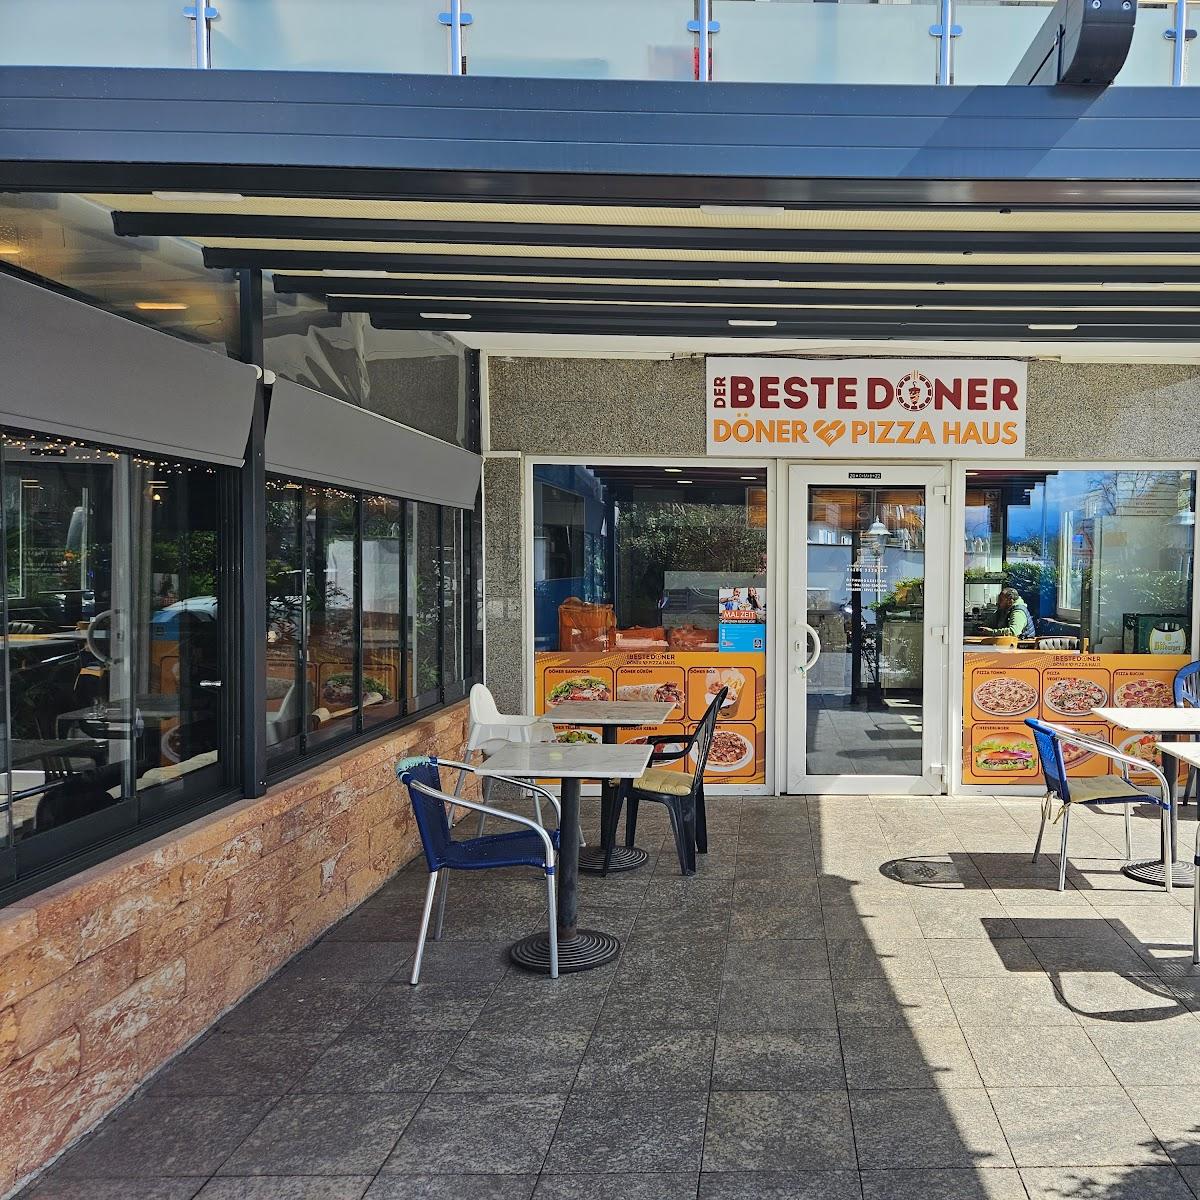 Restaurant "Der Beste Döner | Döner & Pizza Haus" in Mörfelden-Walldorf